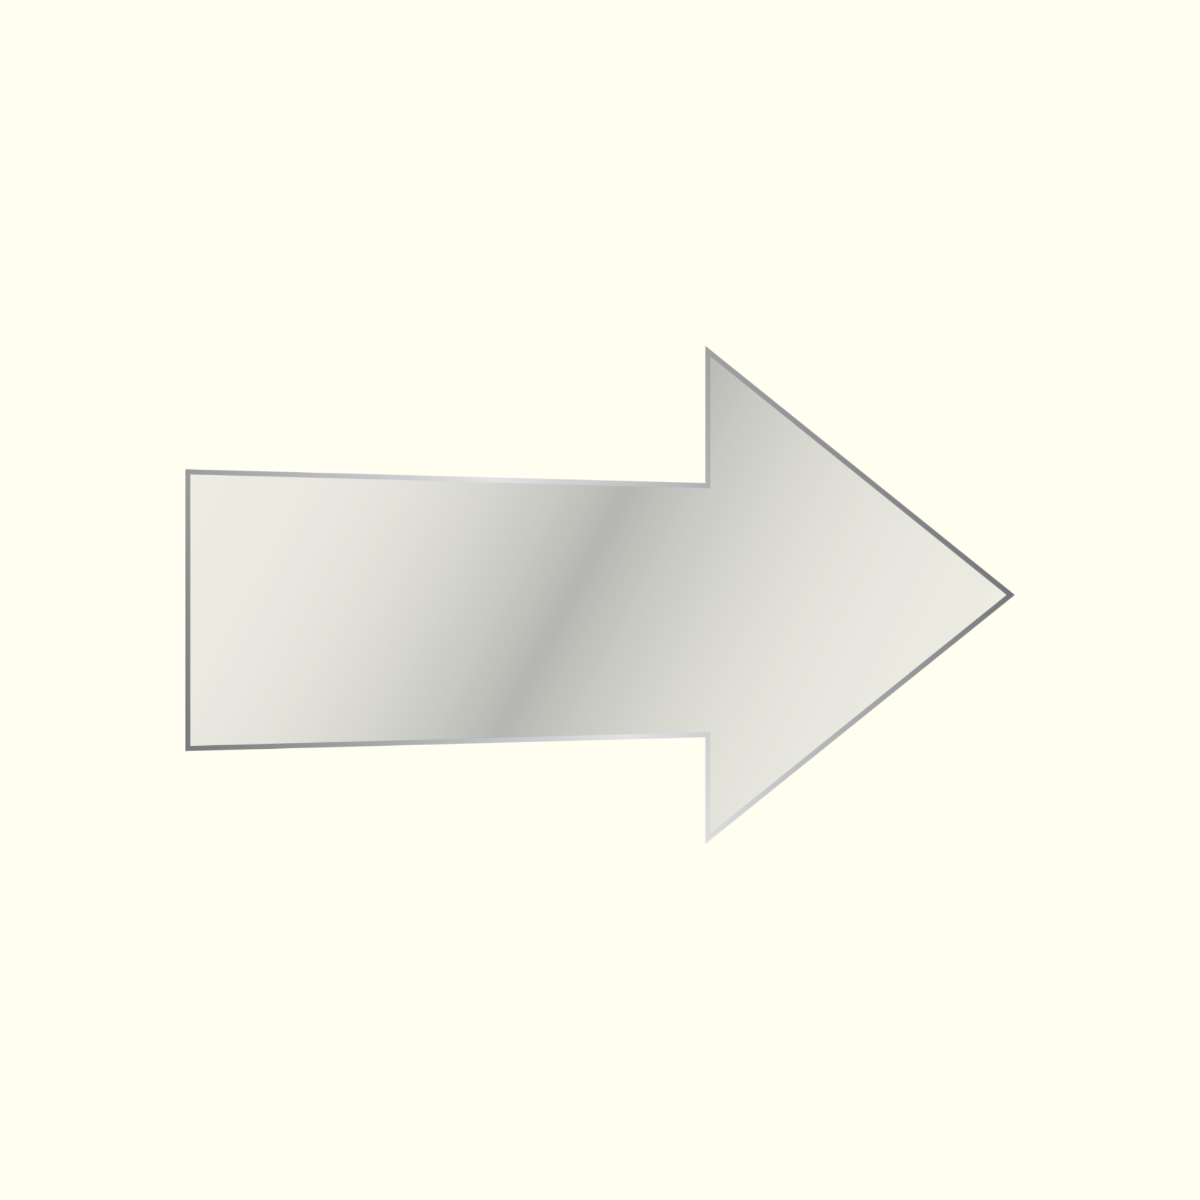 Transparent Arrow Vector Template